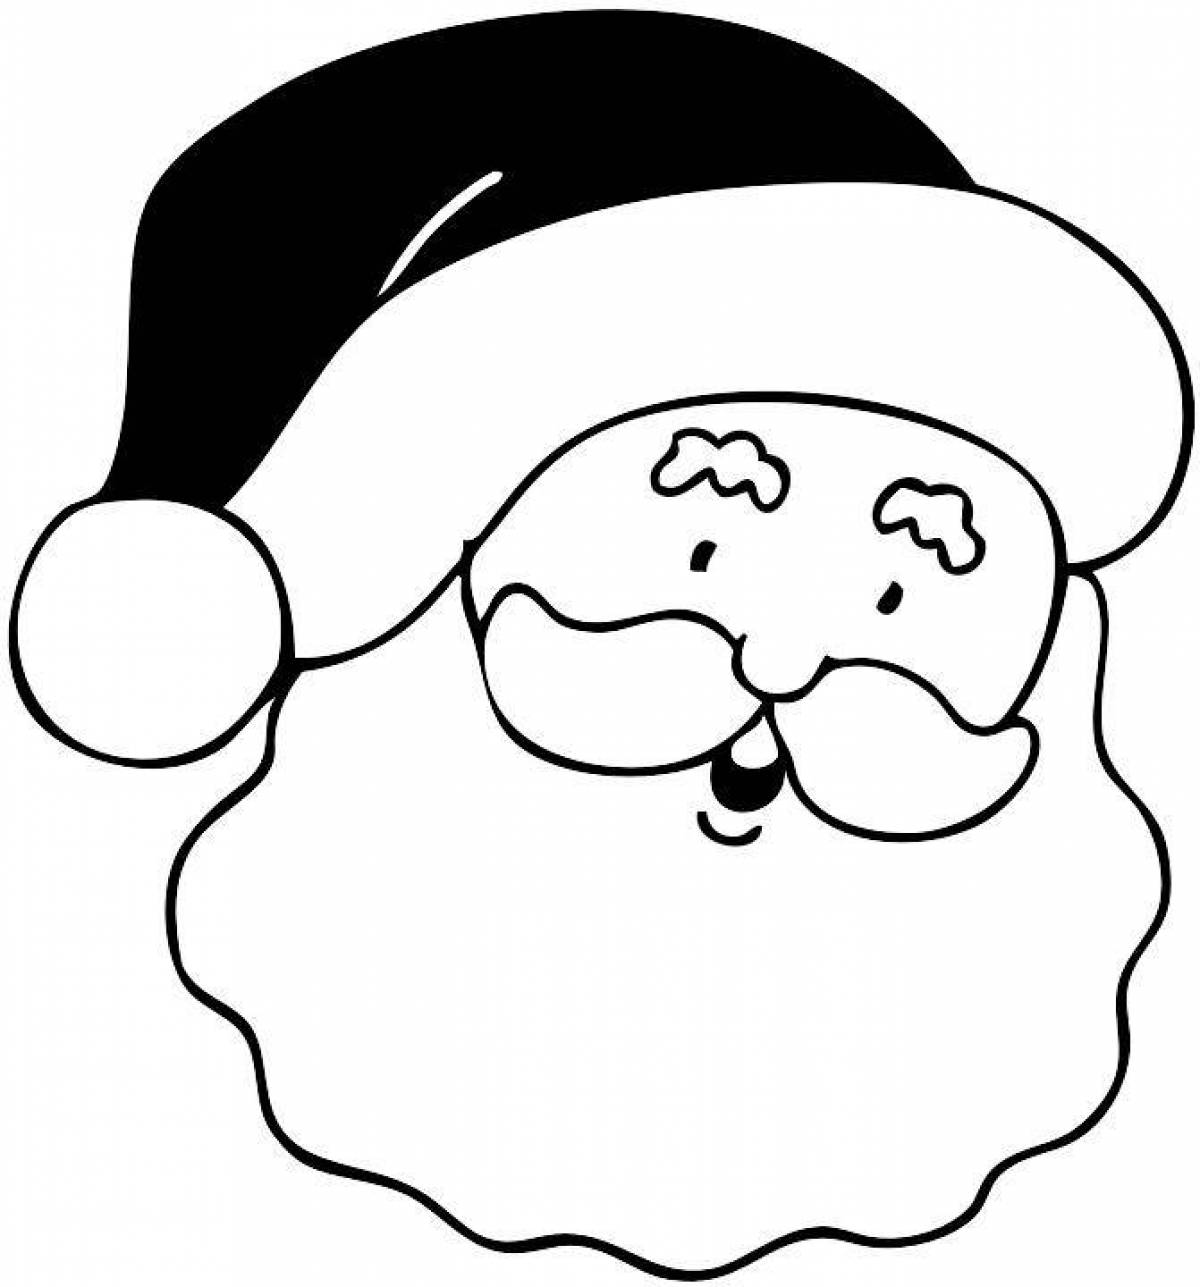 Adorable santa face coloring page